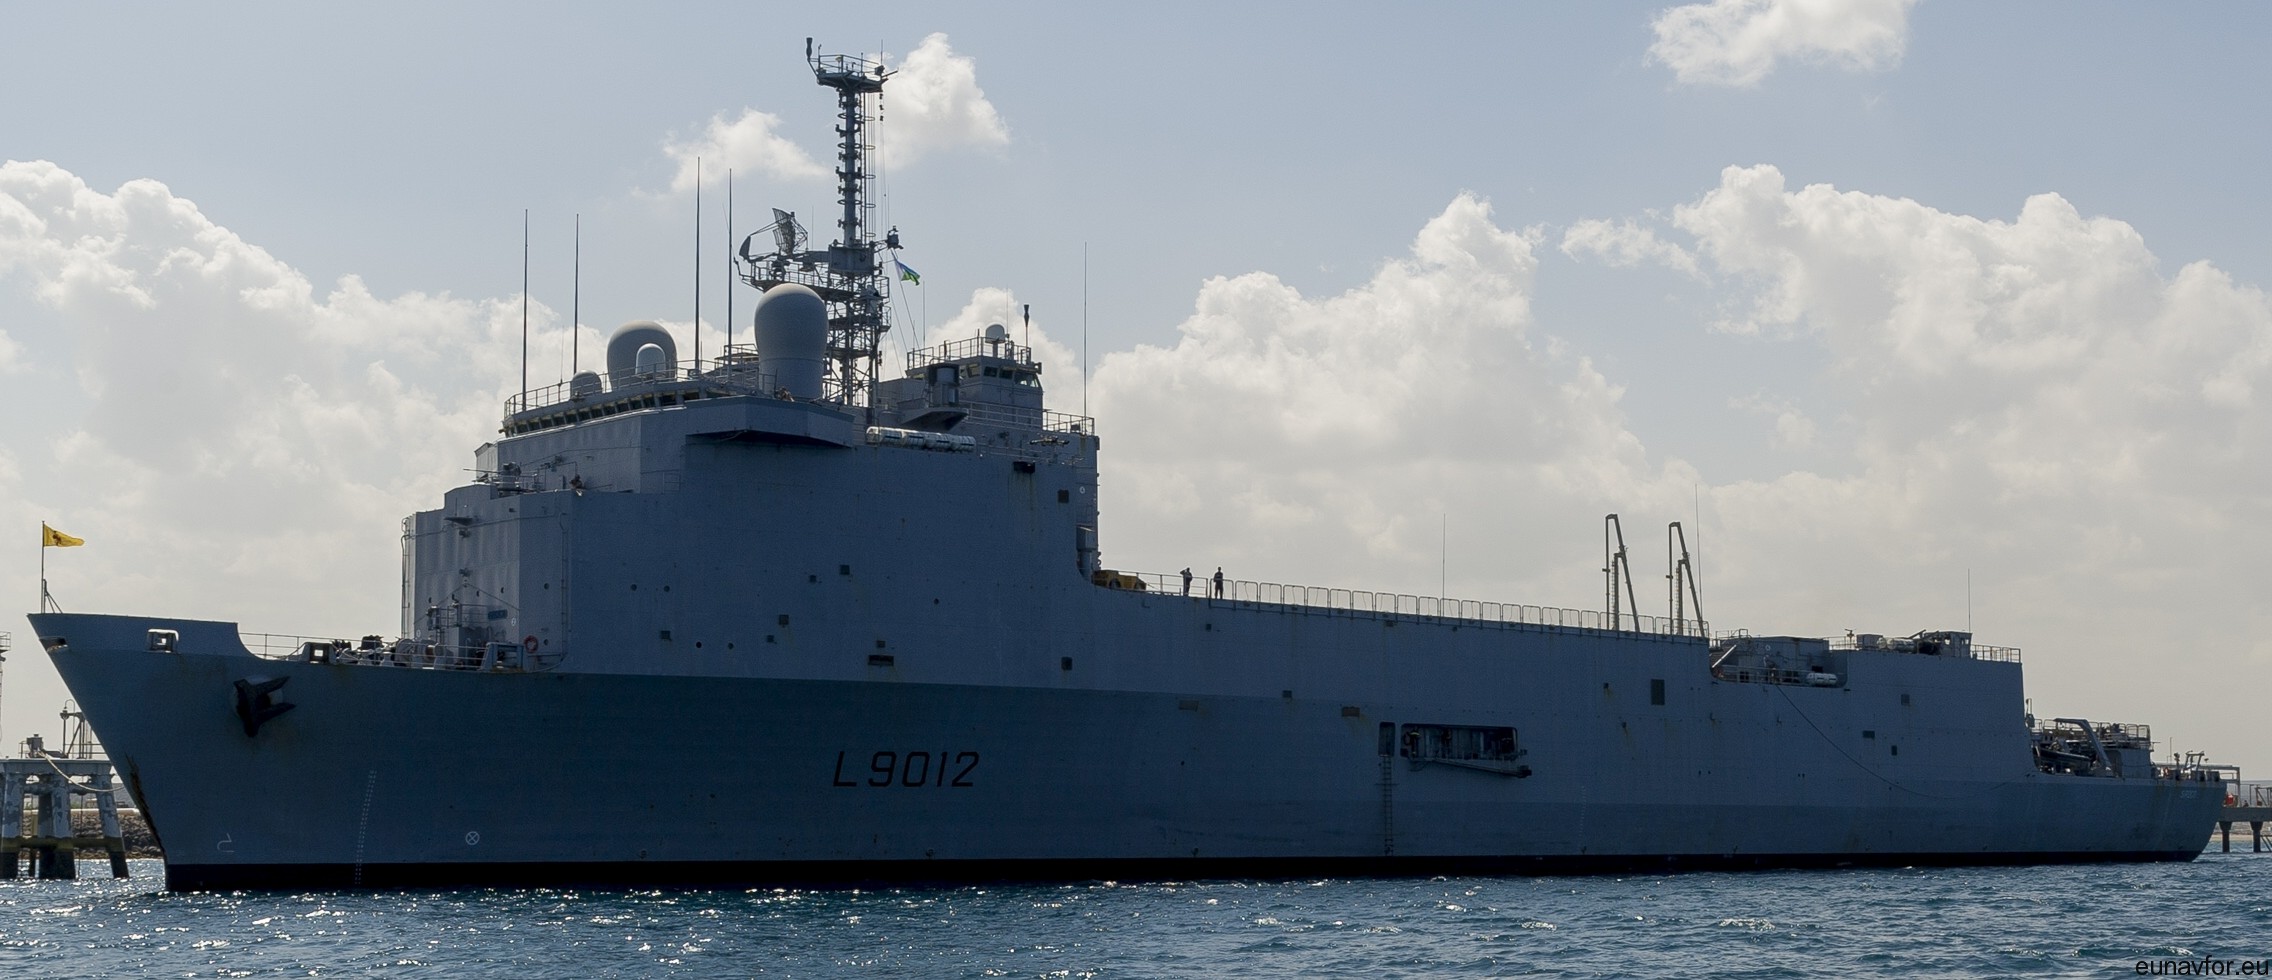 l-9012 fs siroco foudre class amphibious landing ship lpd french navy marine nationale 07